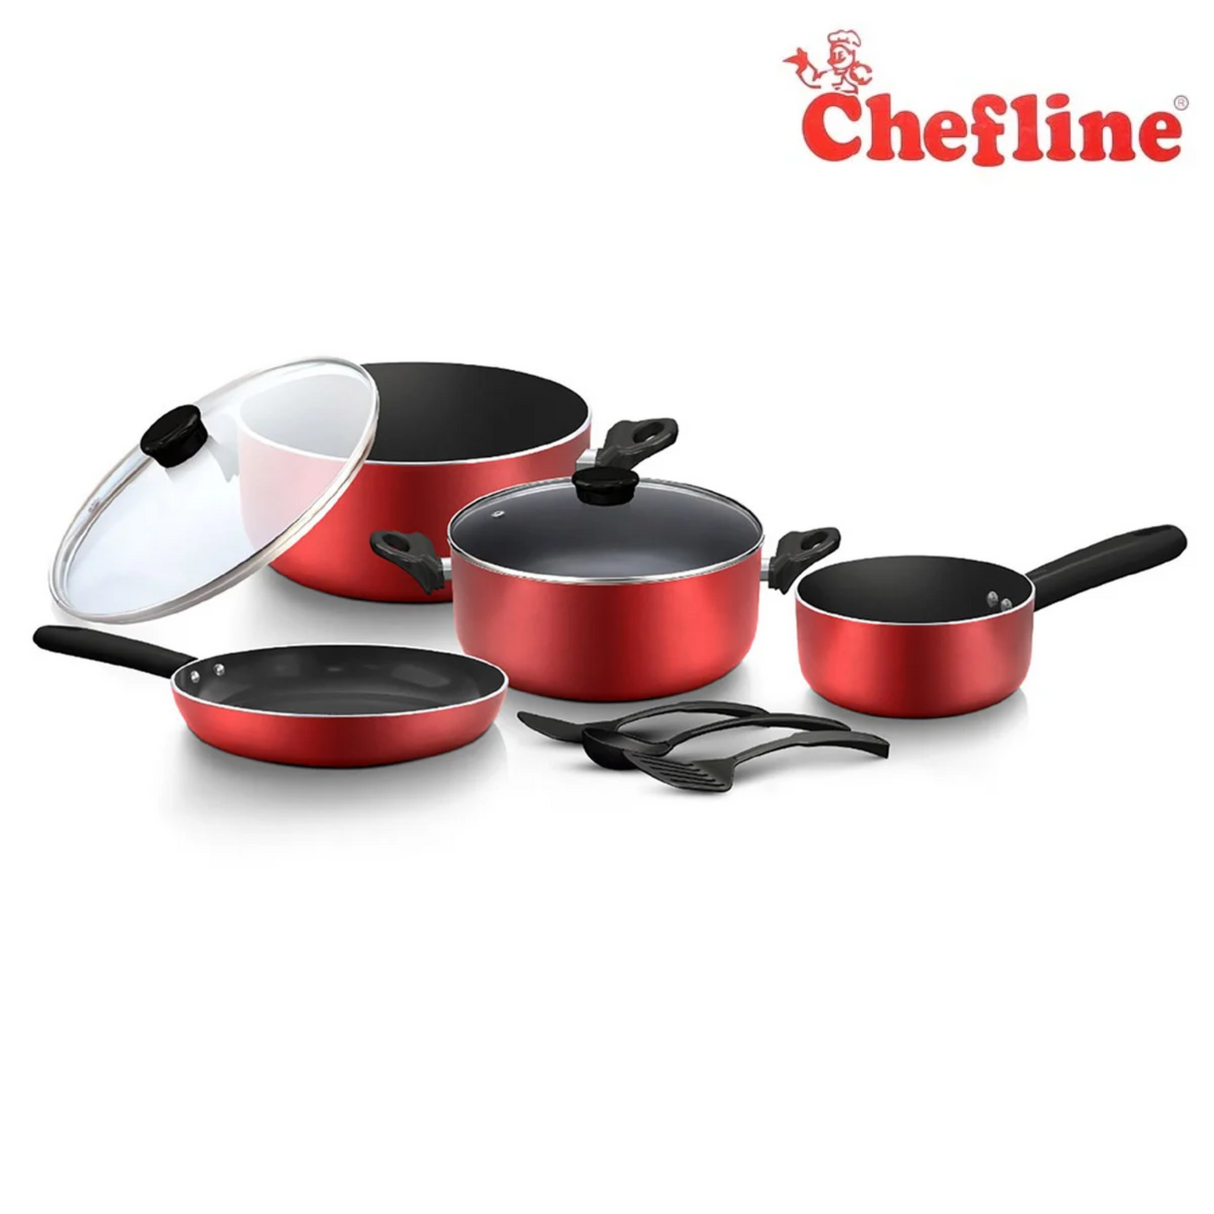 Chefline Non-Stick Cookware Set- 9 pieces